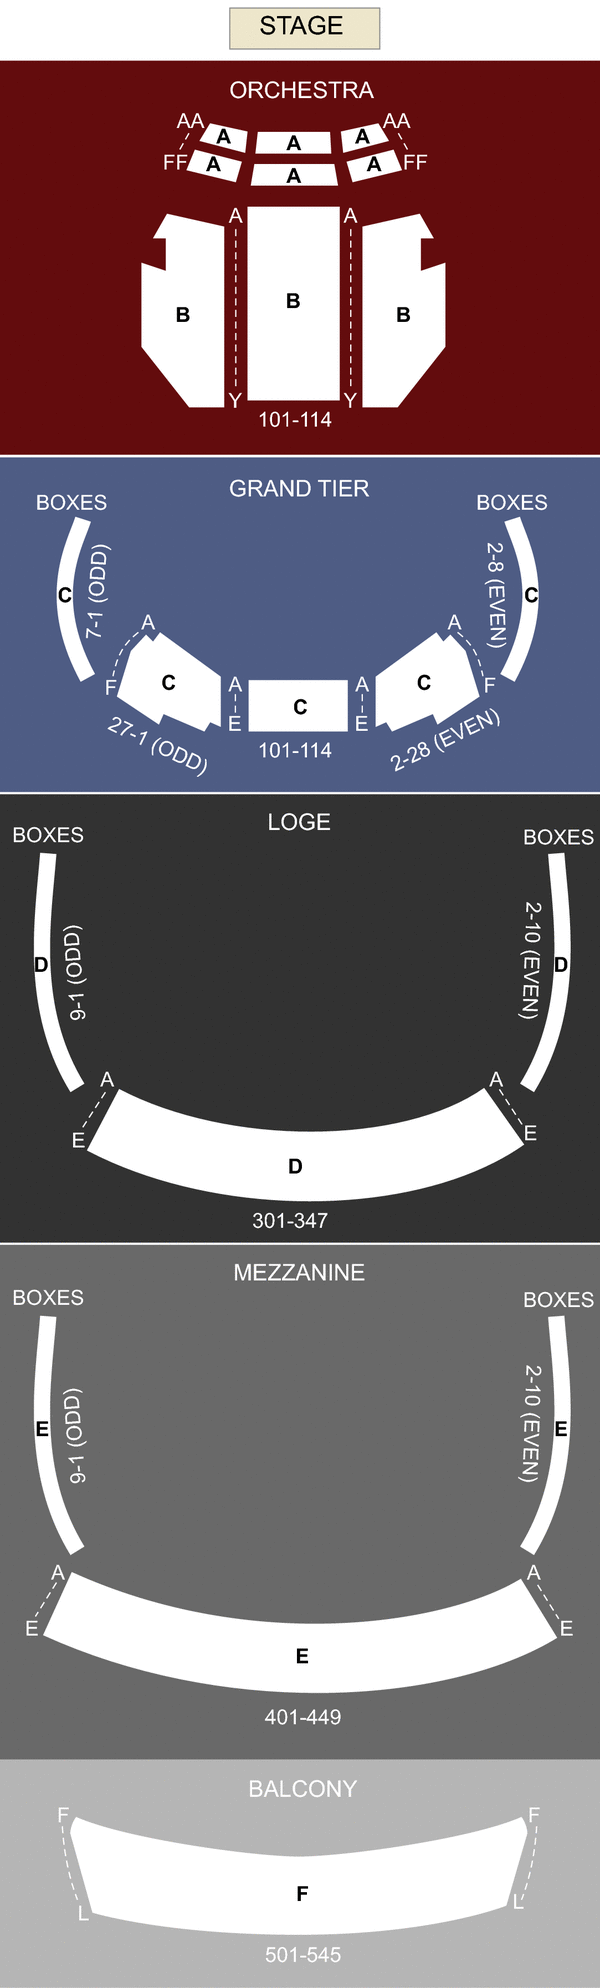 Dreyfoos Concert Hall Seating Chart